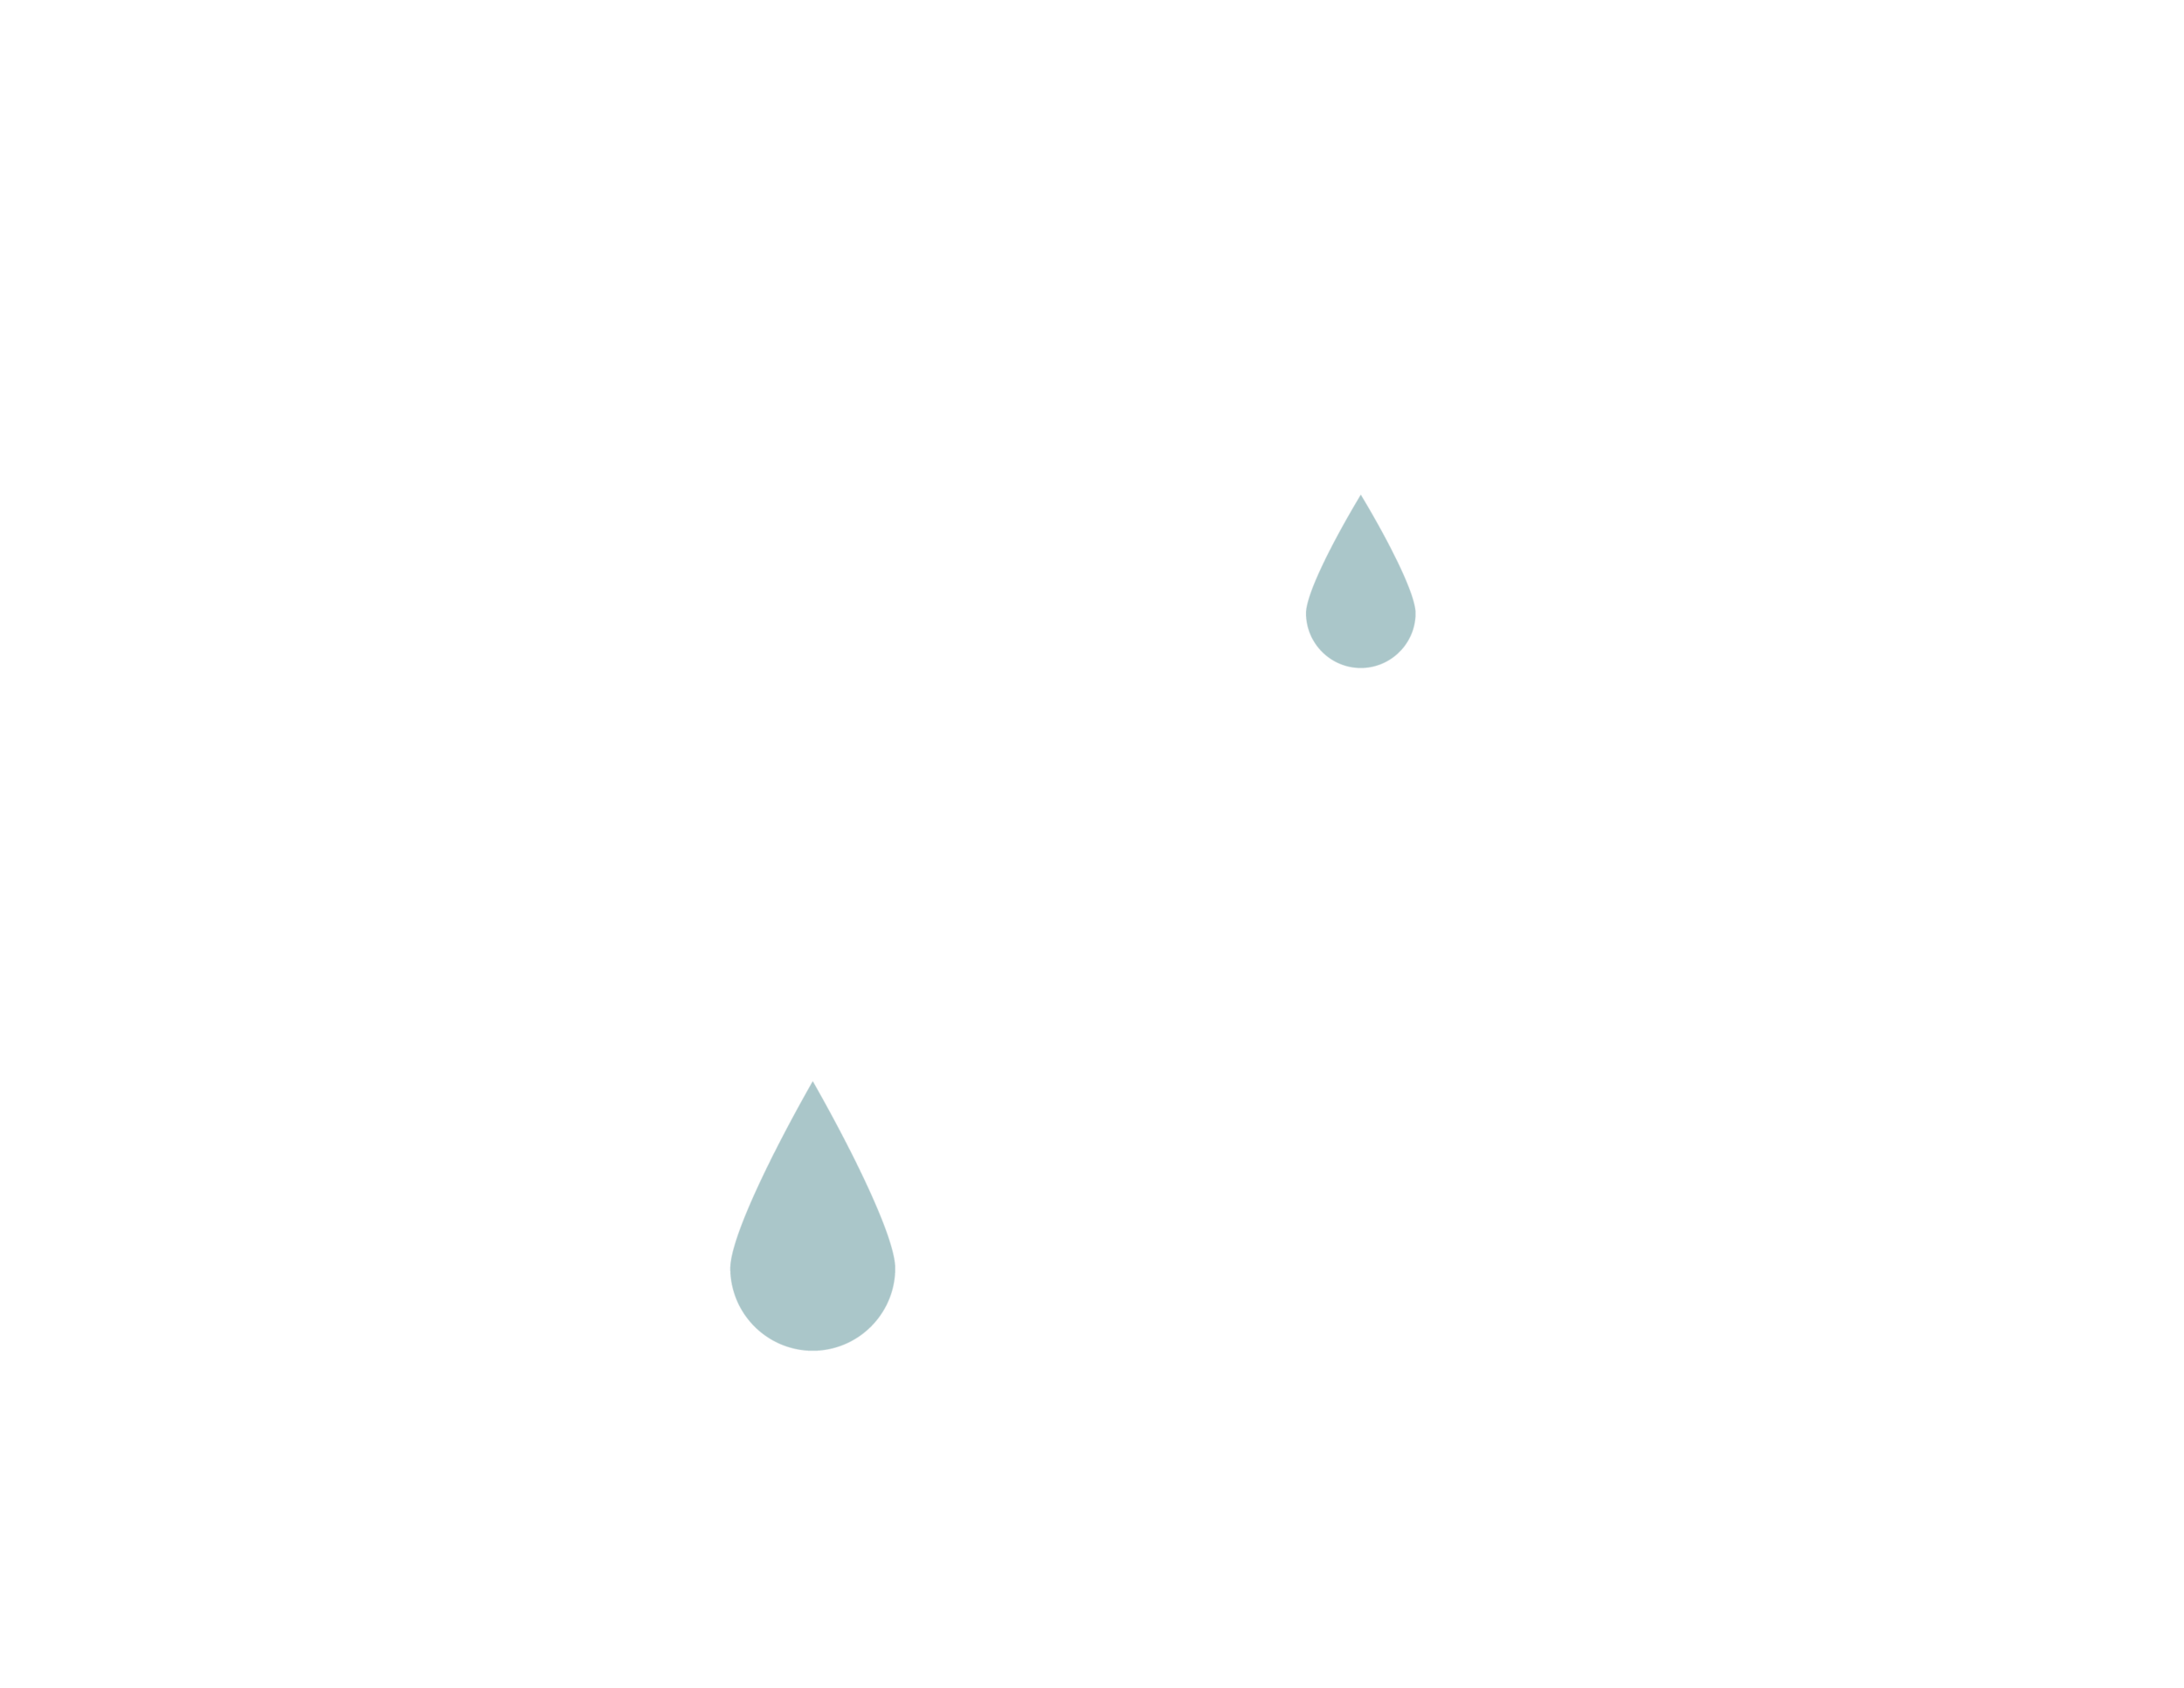 Hometown Sweat